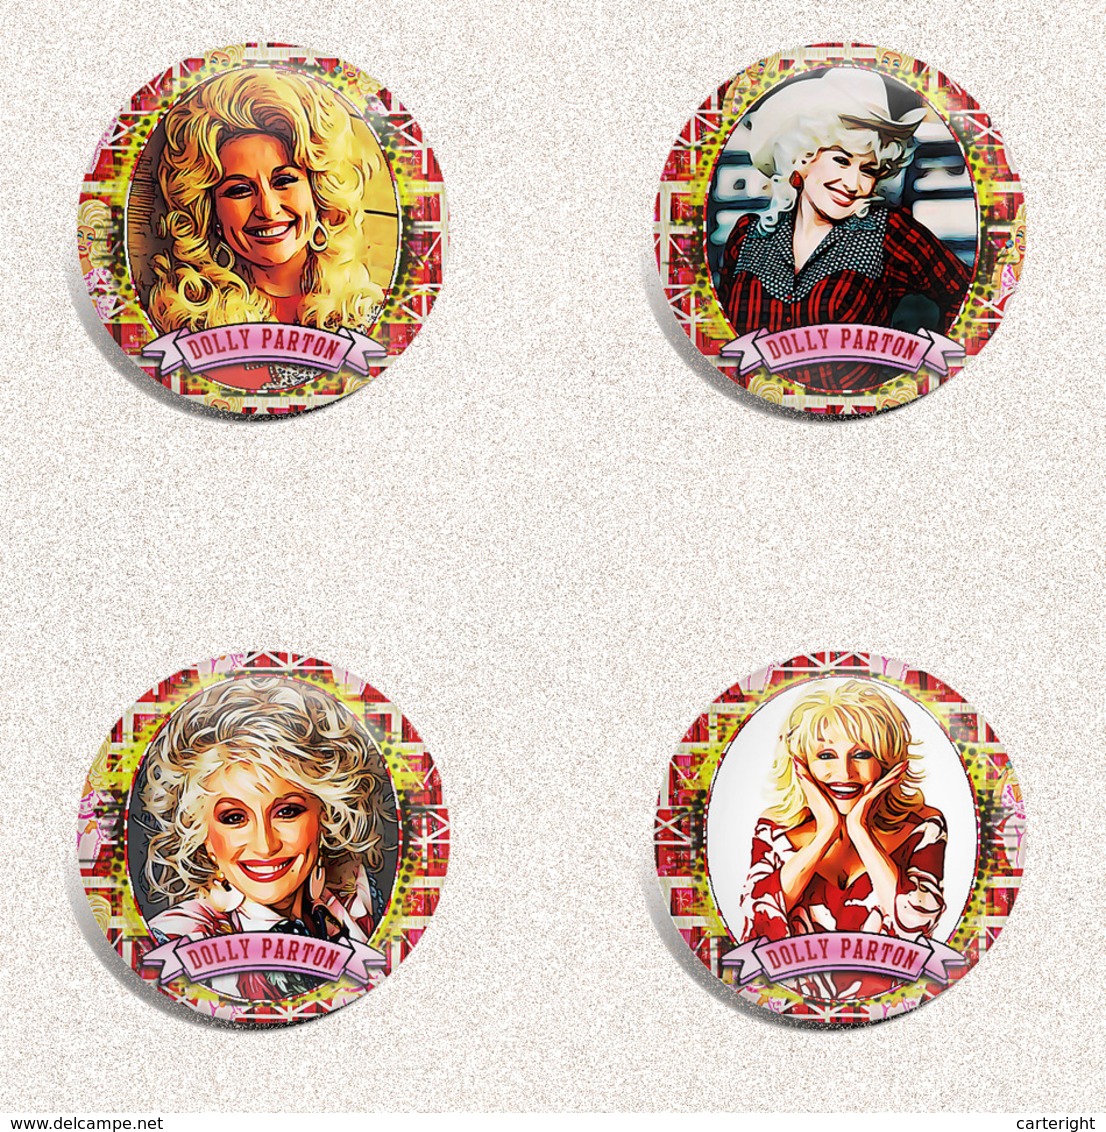 140 X Dolly Parton Music Fan ART BADGE BUTTON PIN SET 5-8 (1inch/25mm Diameter) - Musica